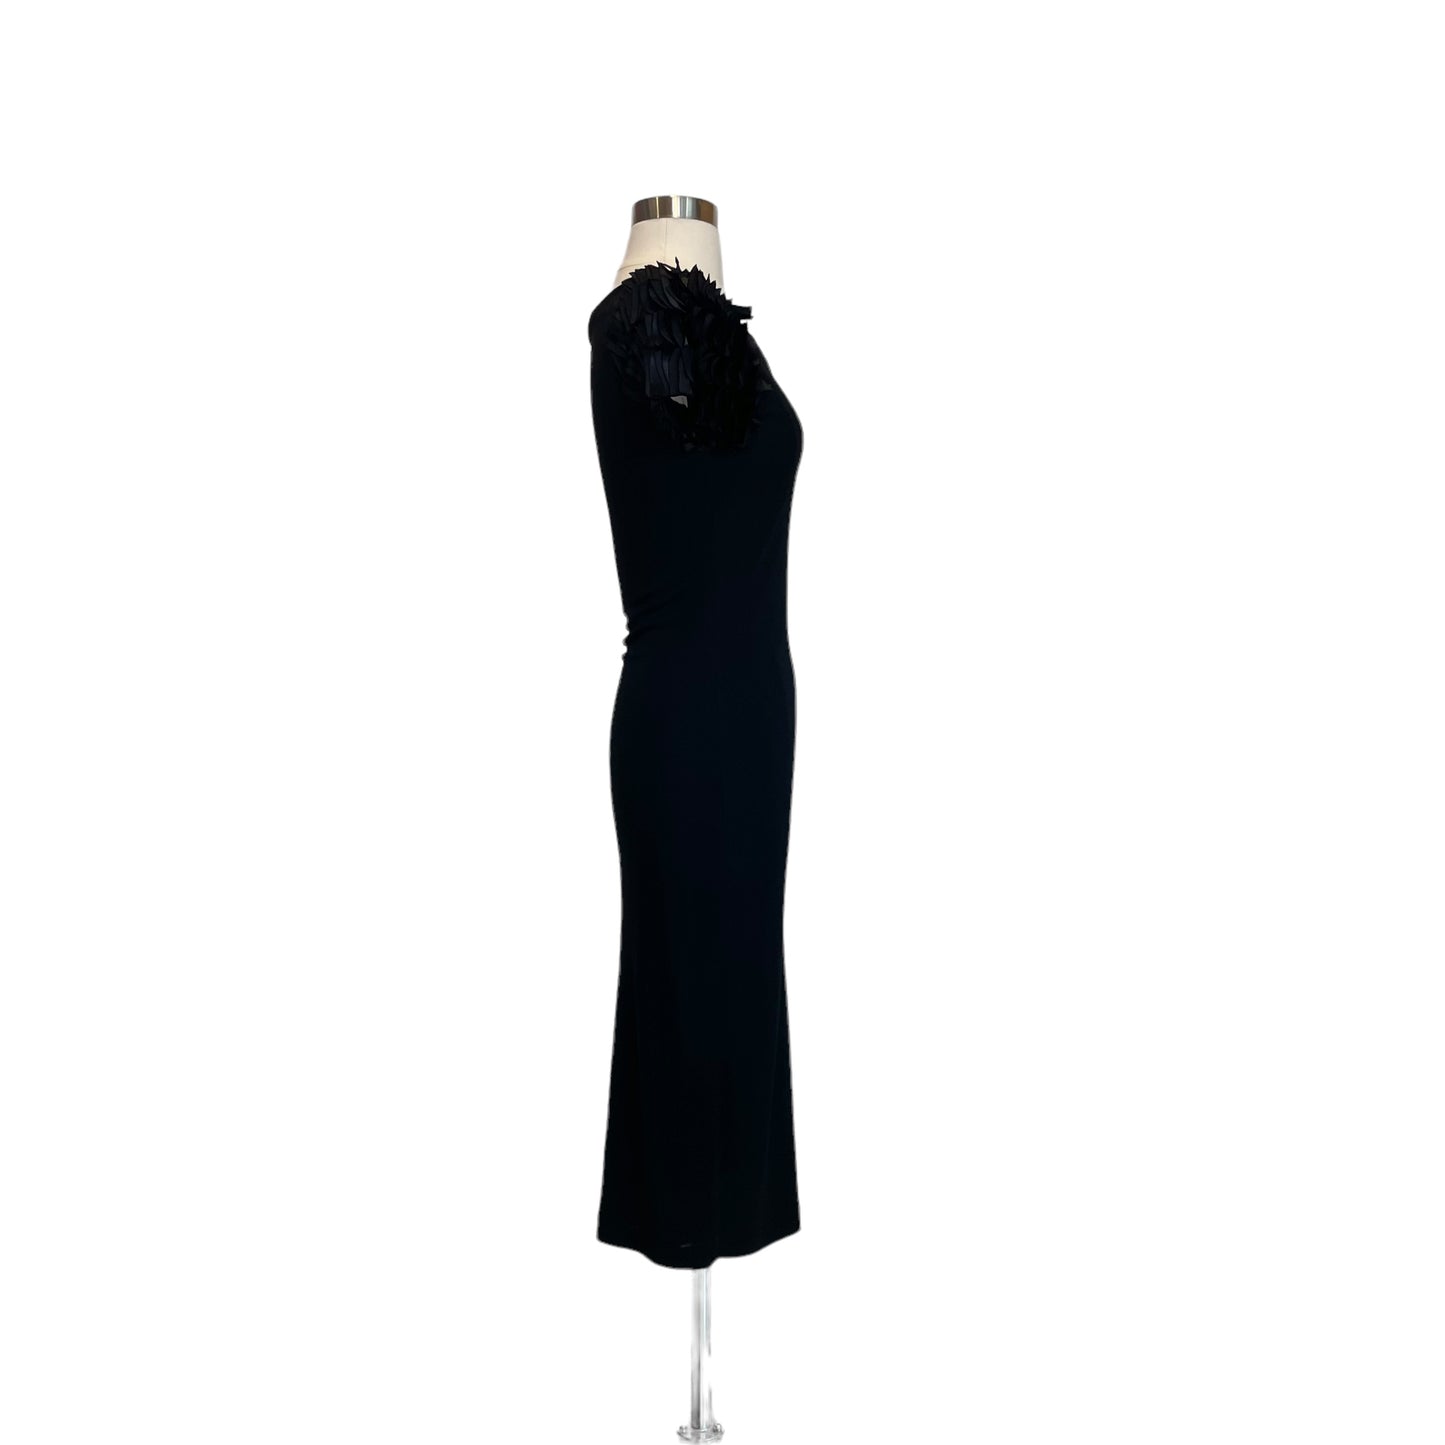 Black Ruffle Sleeve Dress - M